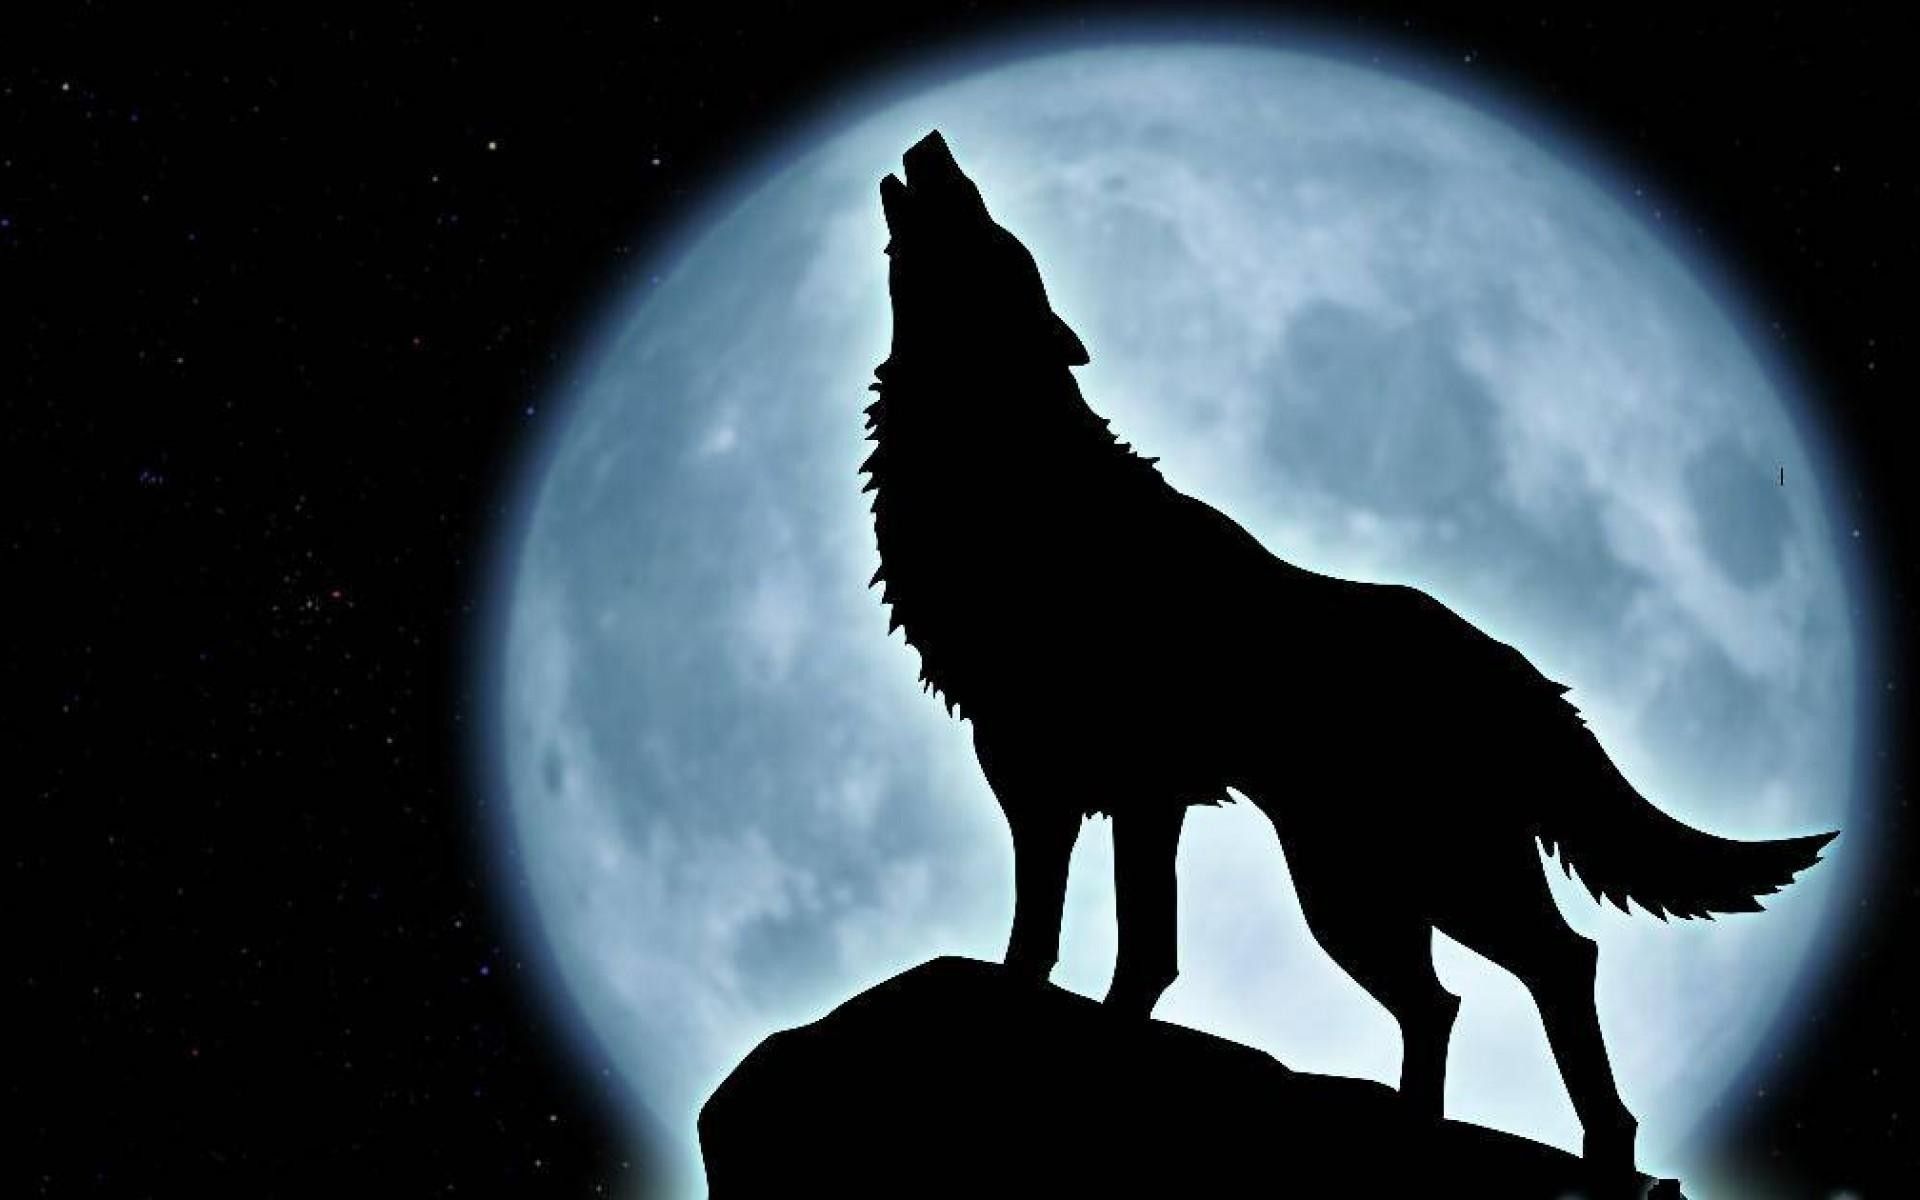 black wolf howling wallpaper hd